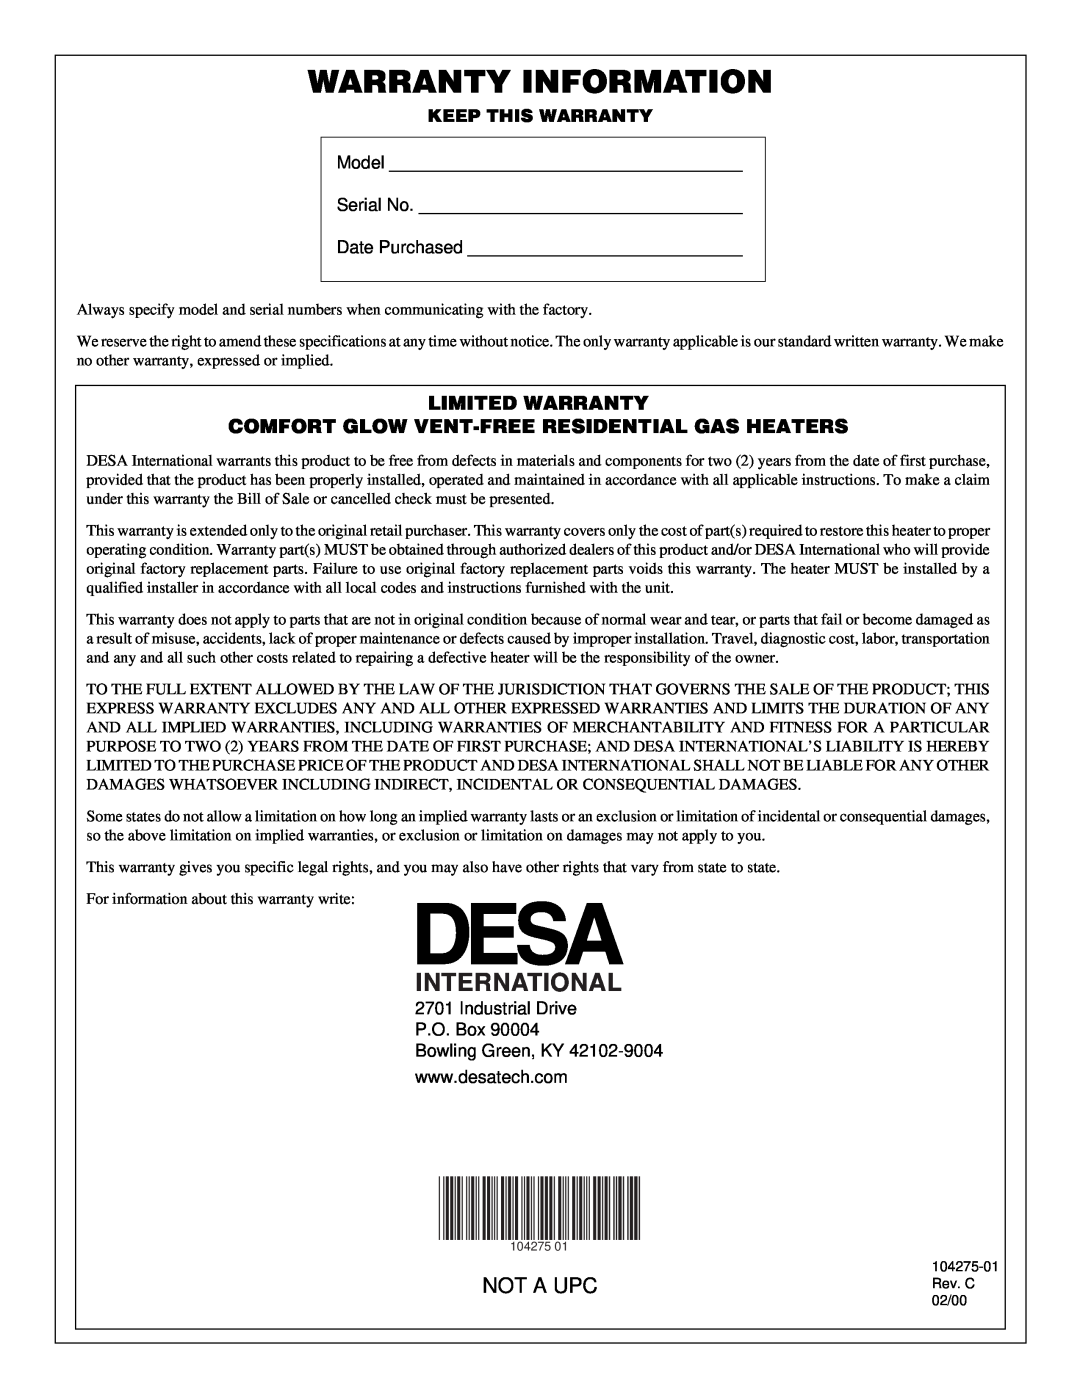 Desa CGP10RLA installation manual Warranty Information, International, Not A Upc, Model, Serial No, Date Purchased 